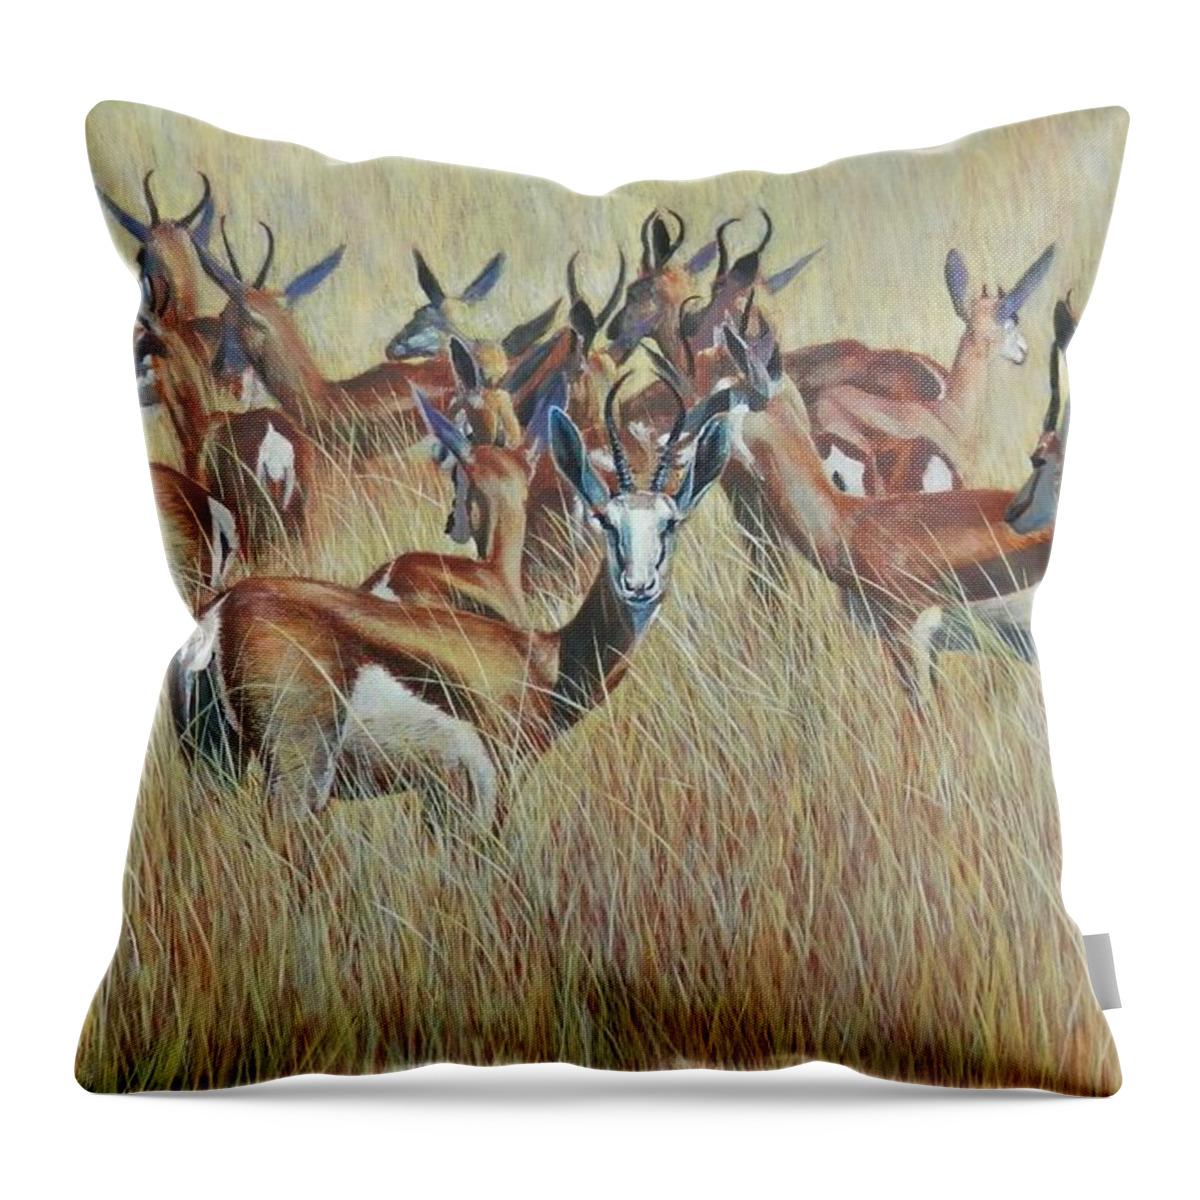 Springbok Throw Pillow featuring the painting Herd of Springbok by John Neeve